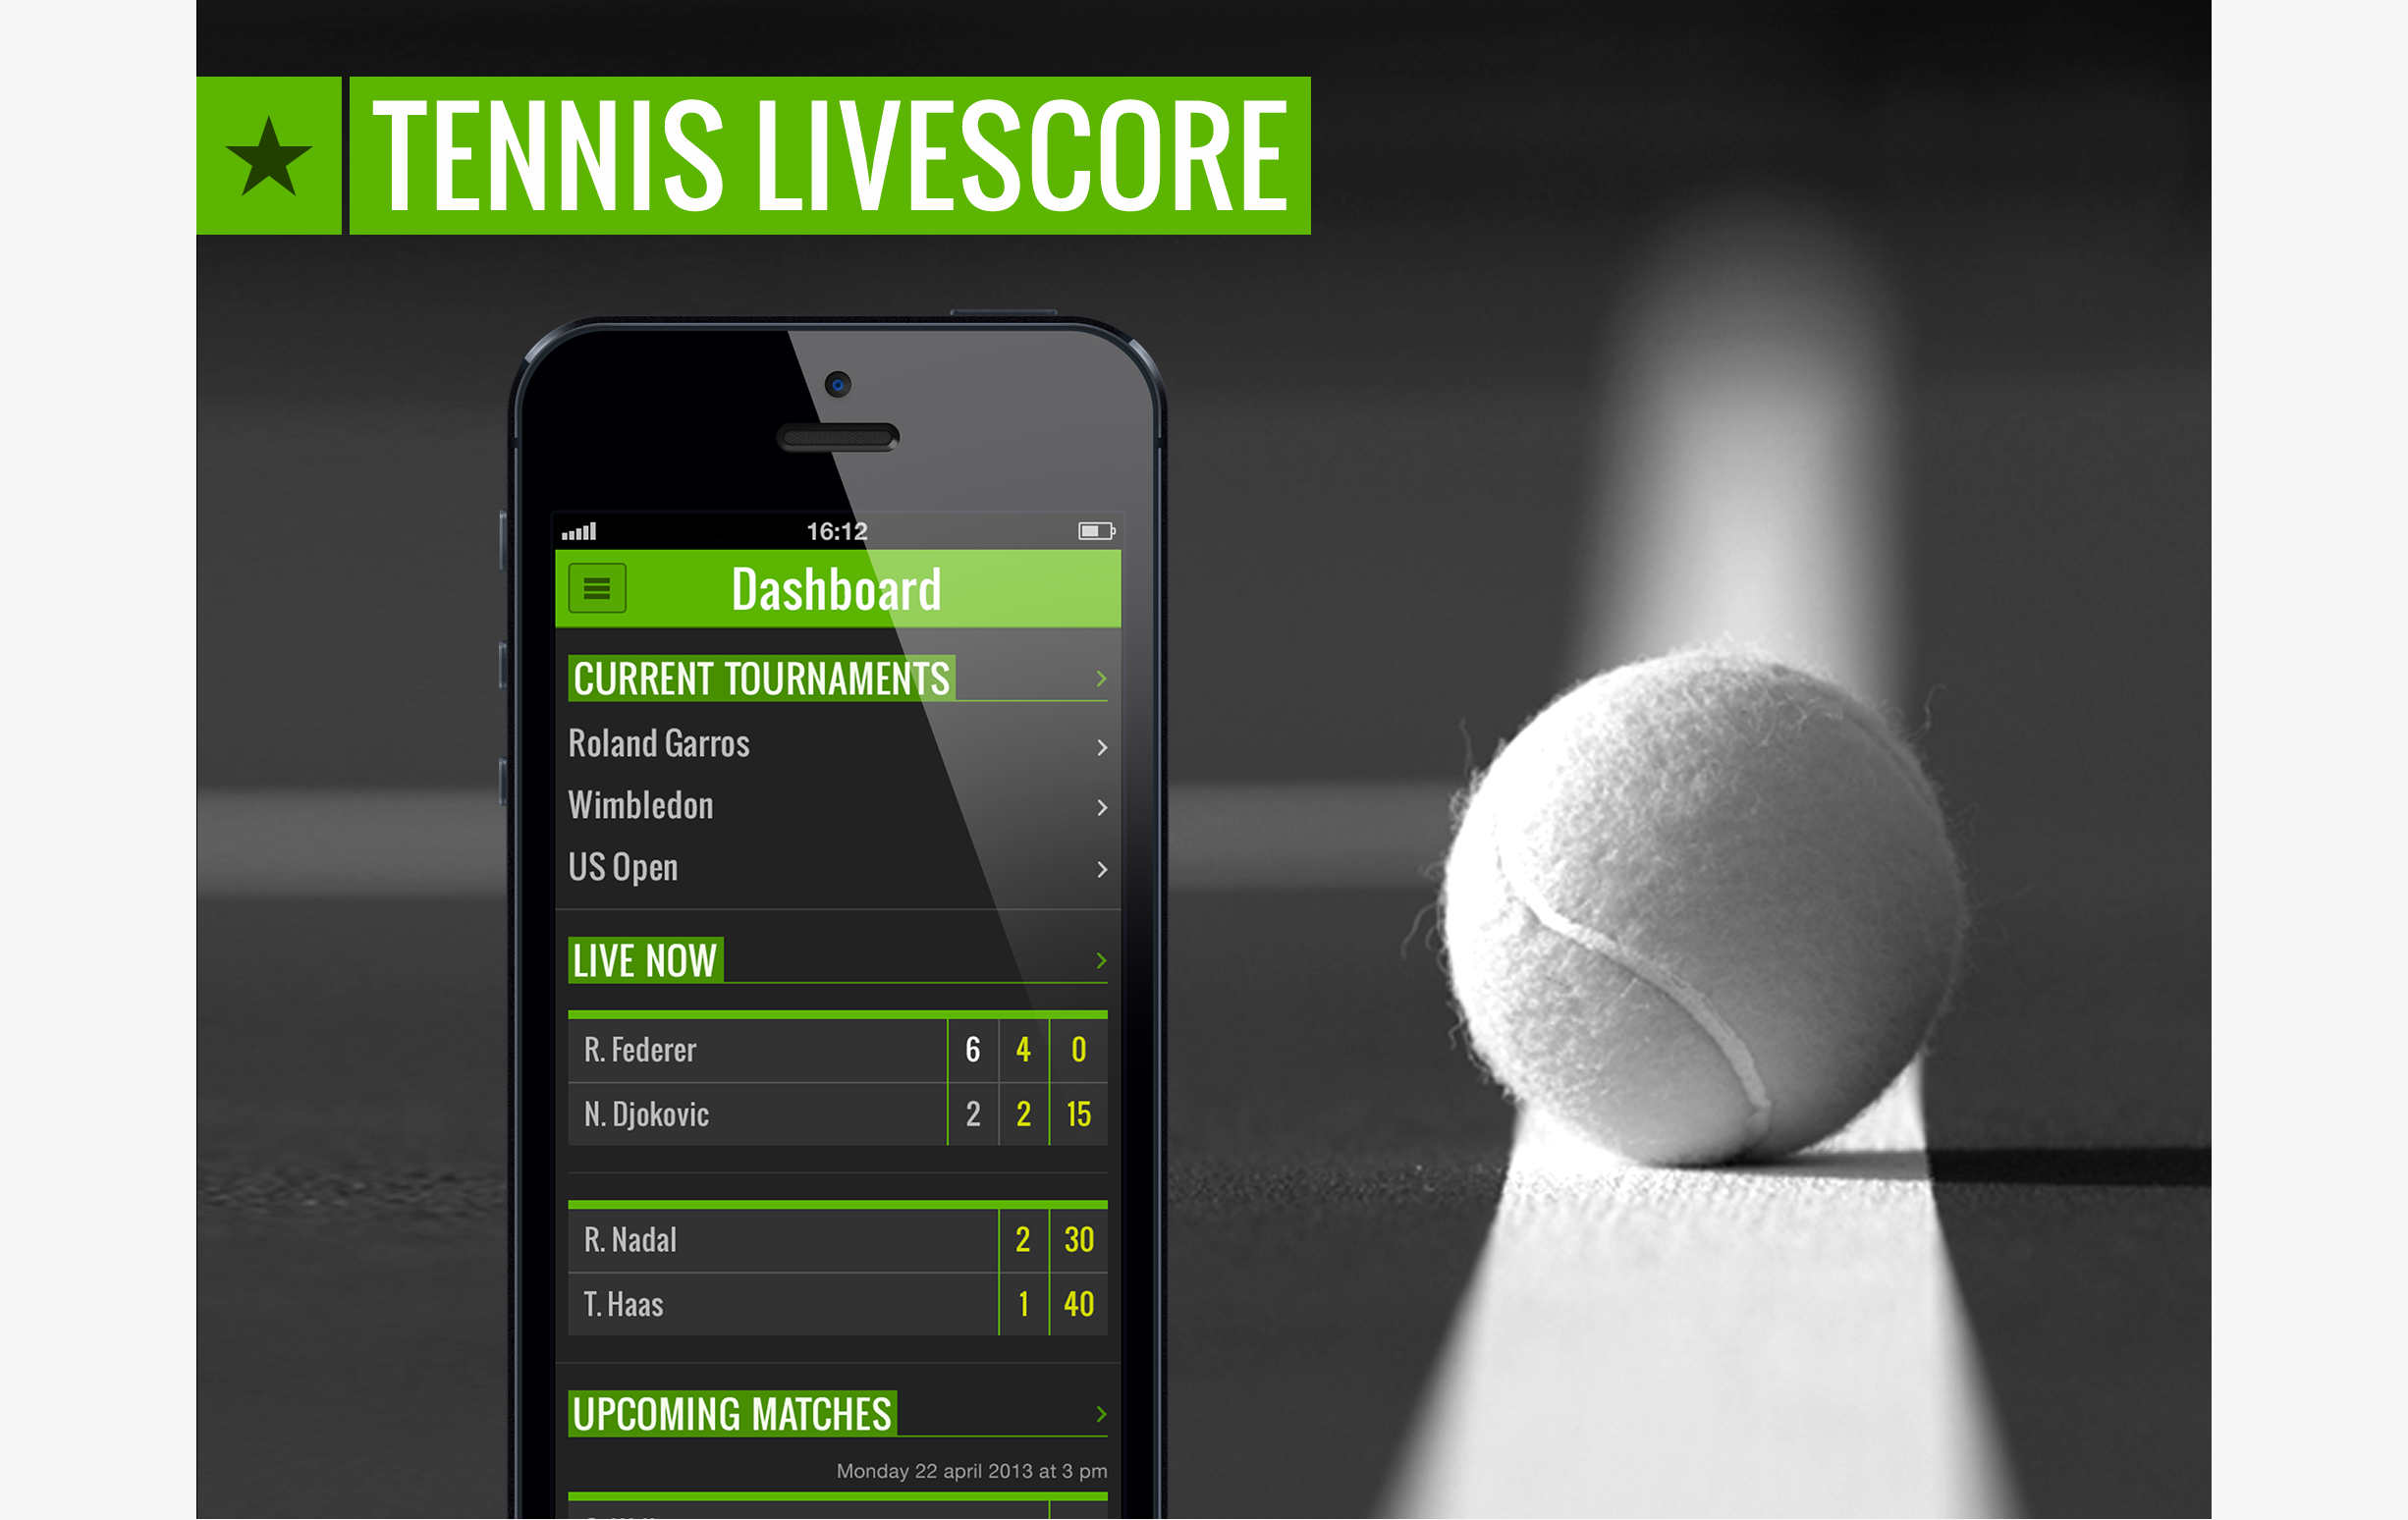 Tennis livescore - header - dashboard